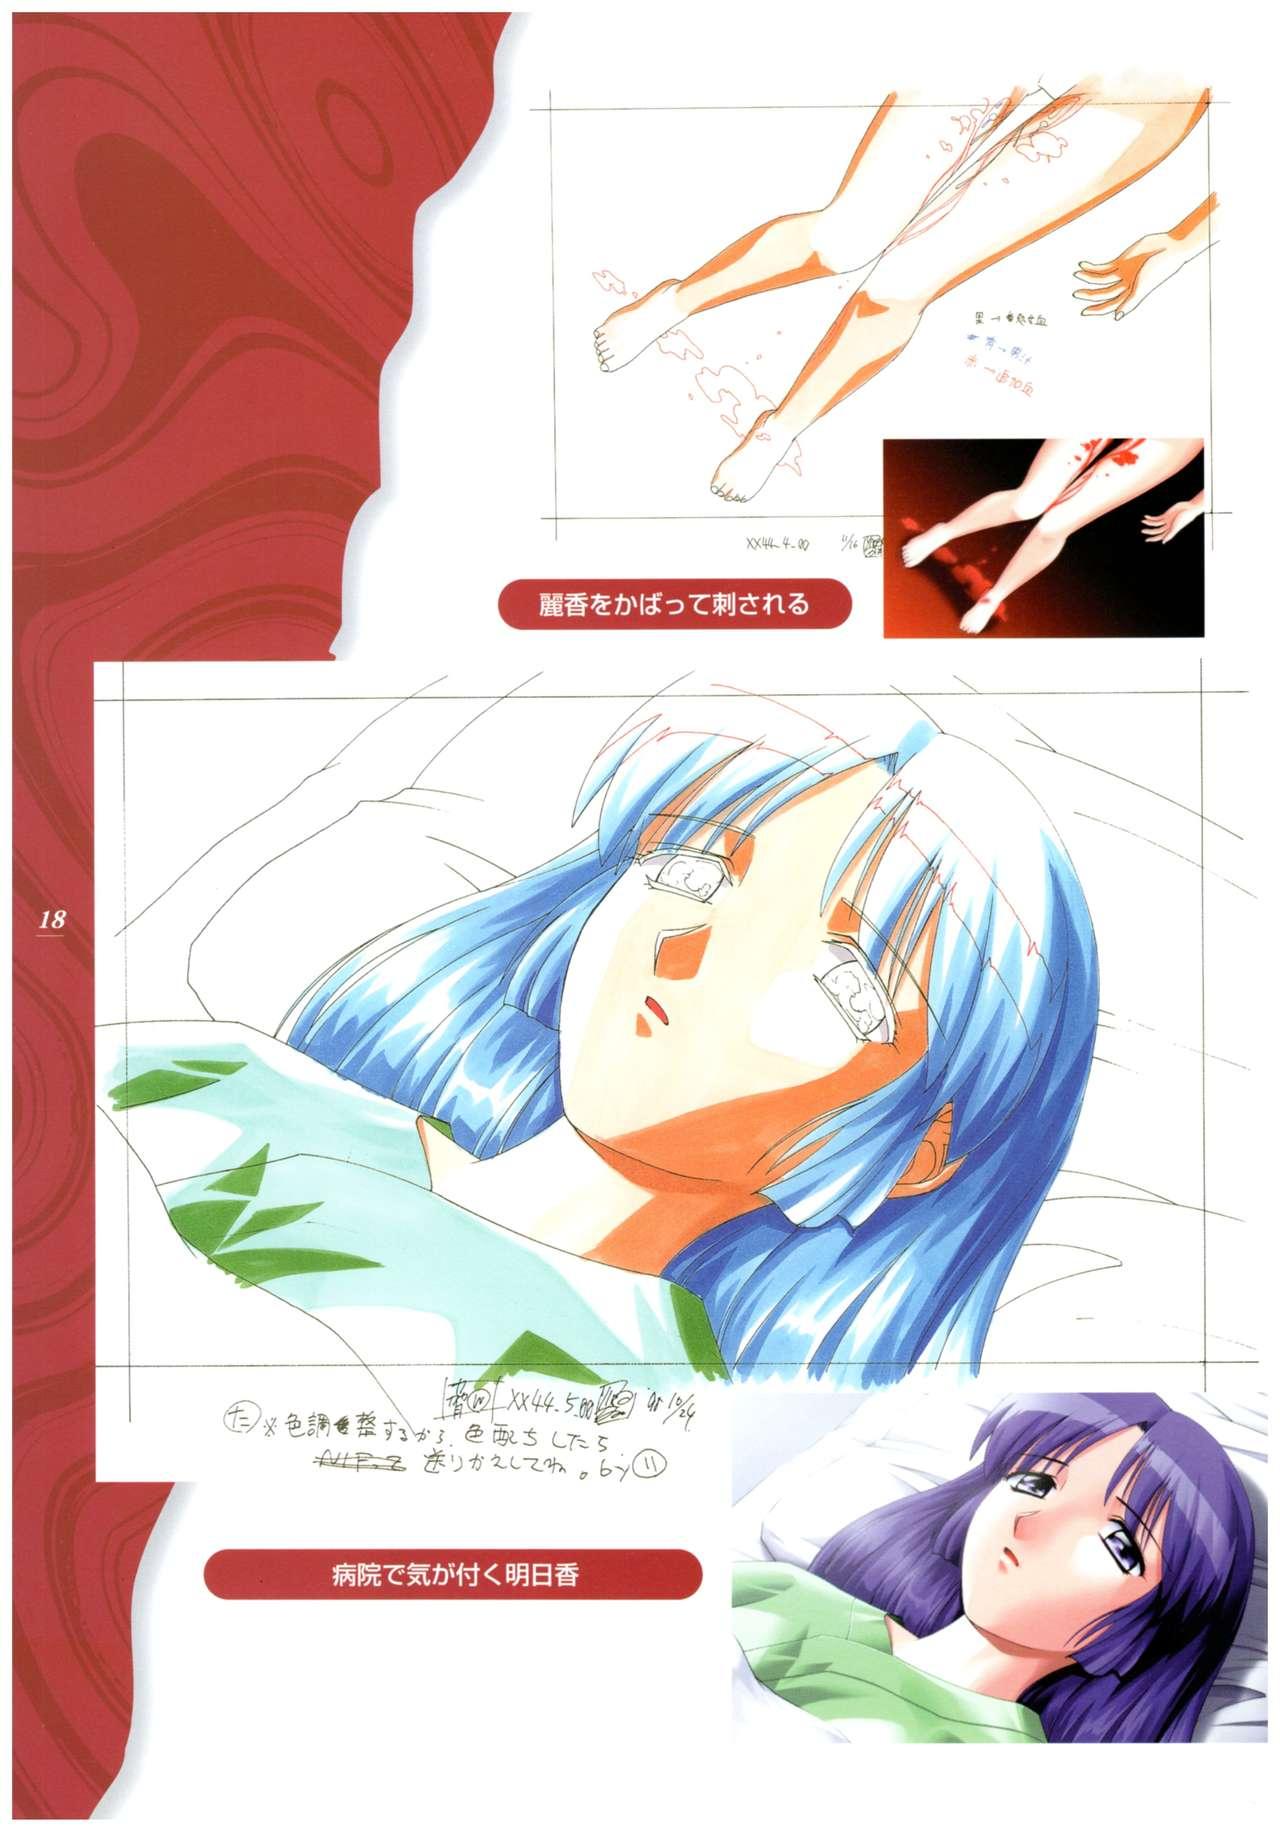 Kyouhaku Owaranai Asu original illustration art book 22